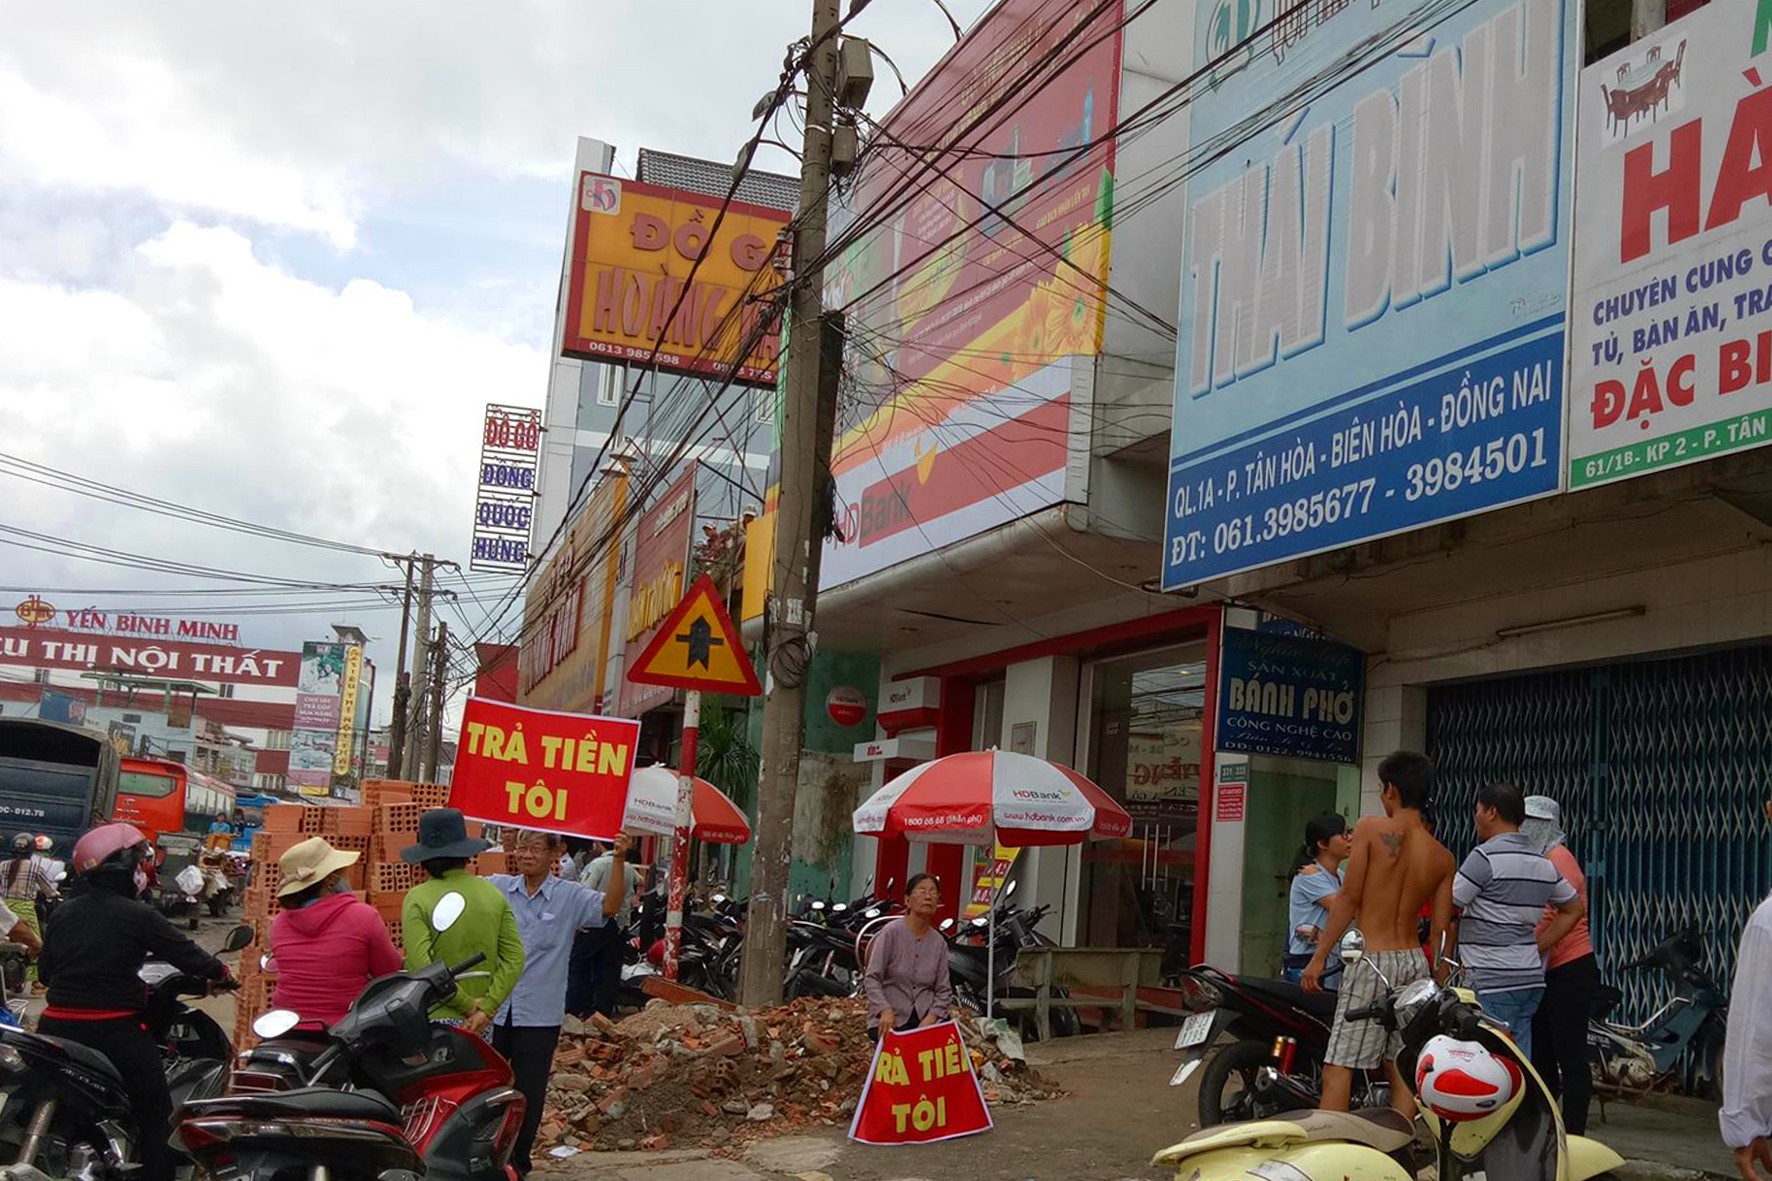 Investors demand return of over $2mn deposit from credit fund in Vietnam